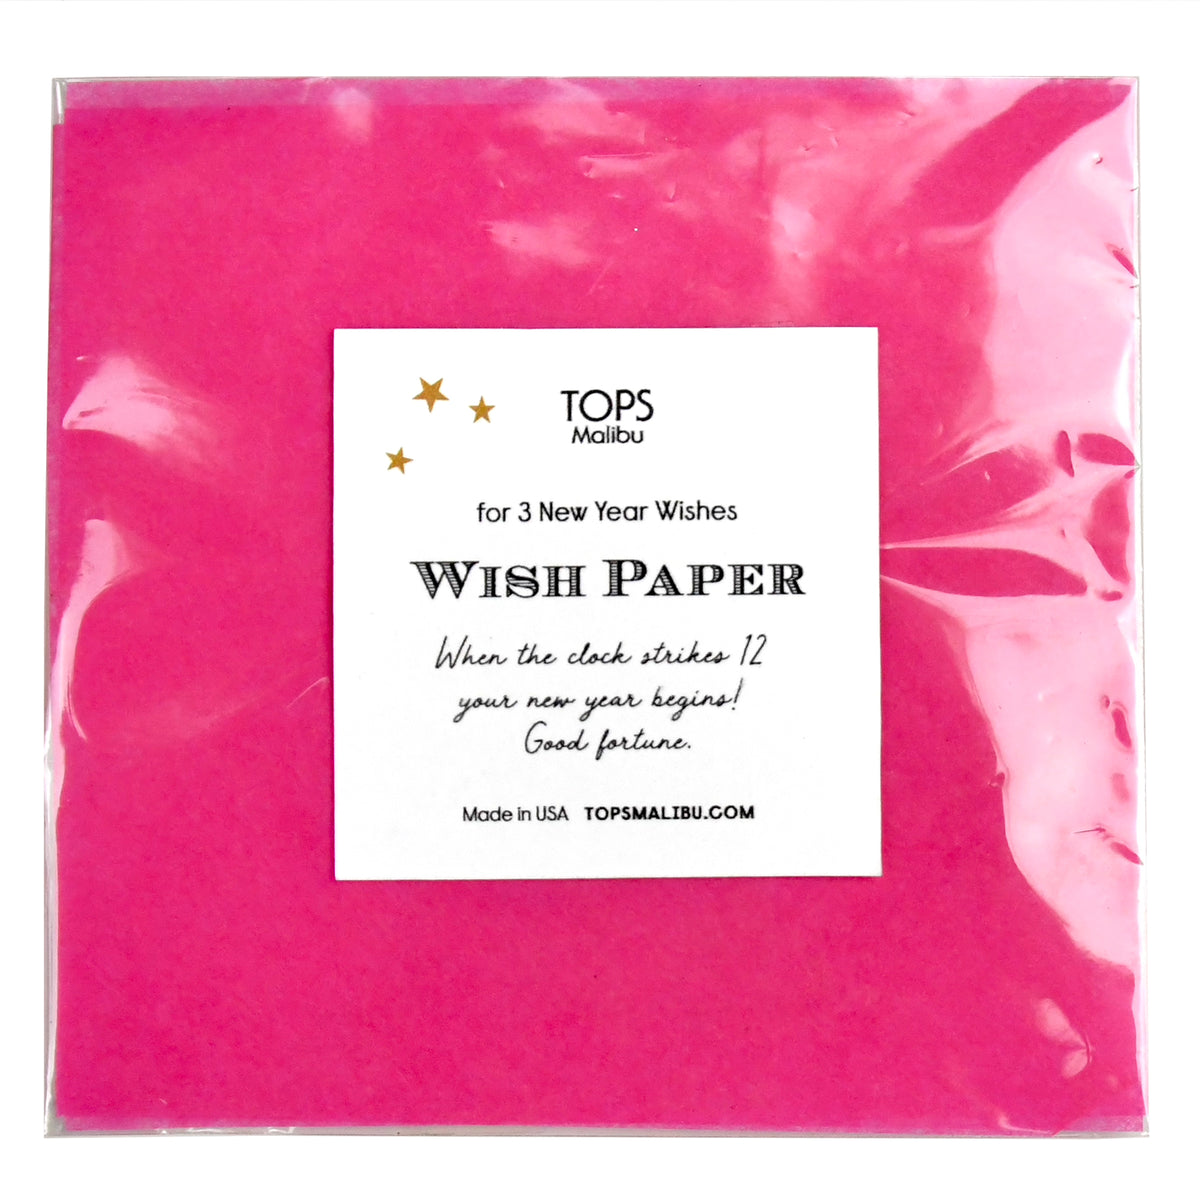 Wish Paper - 3 New Year Wishes